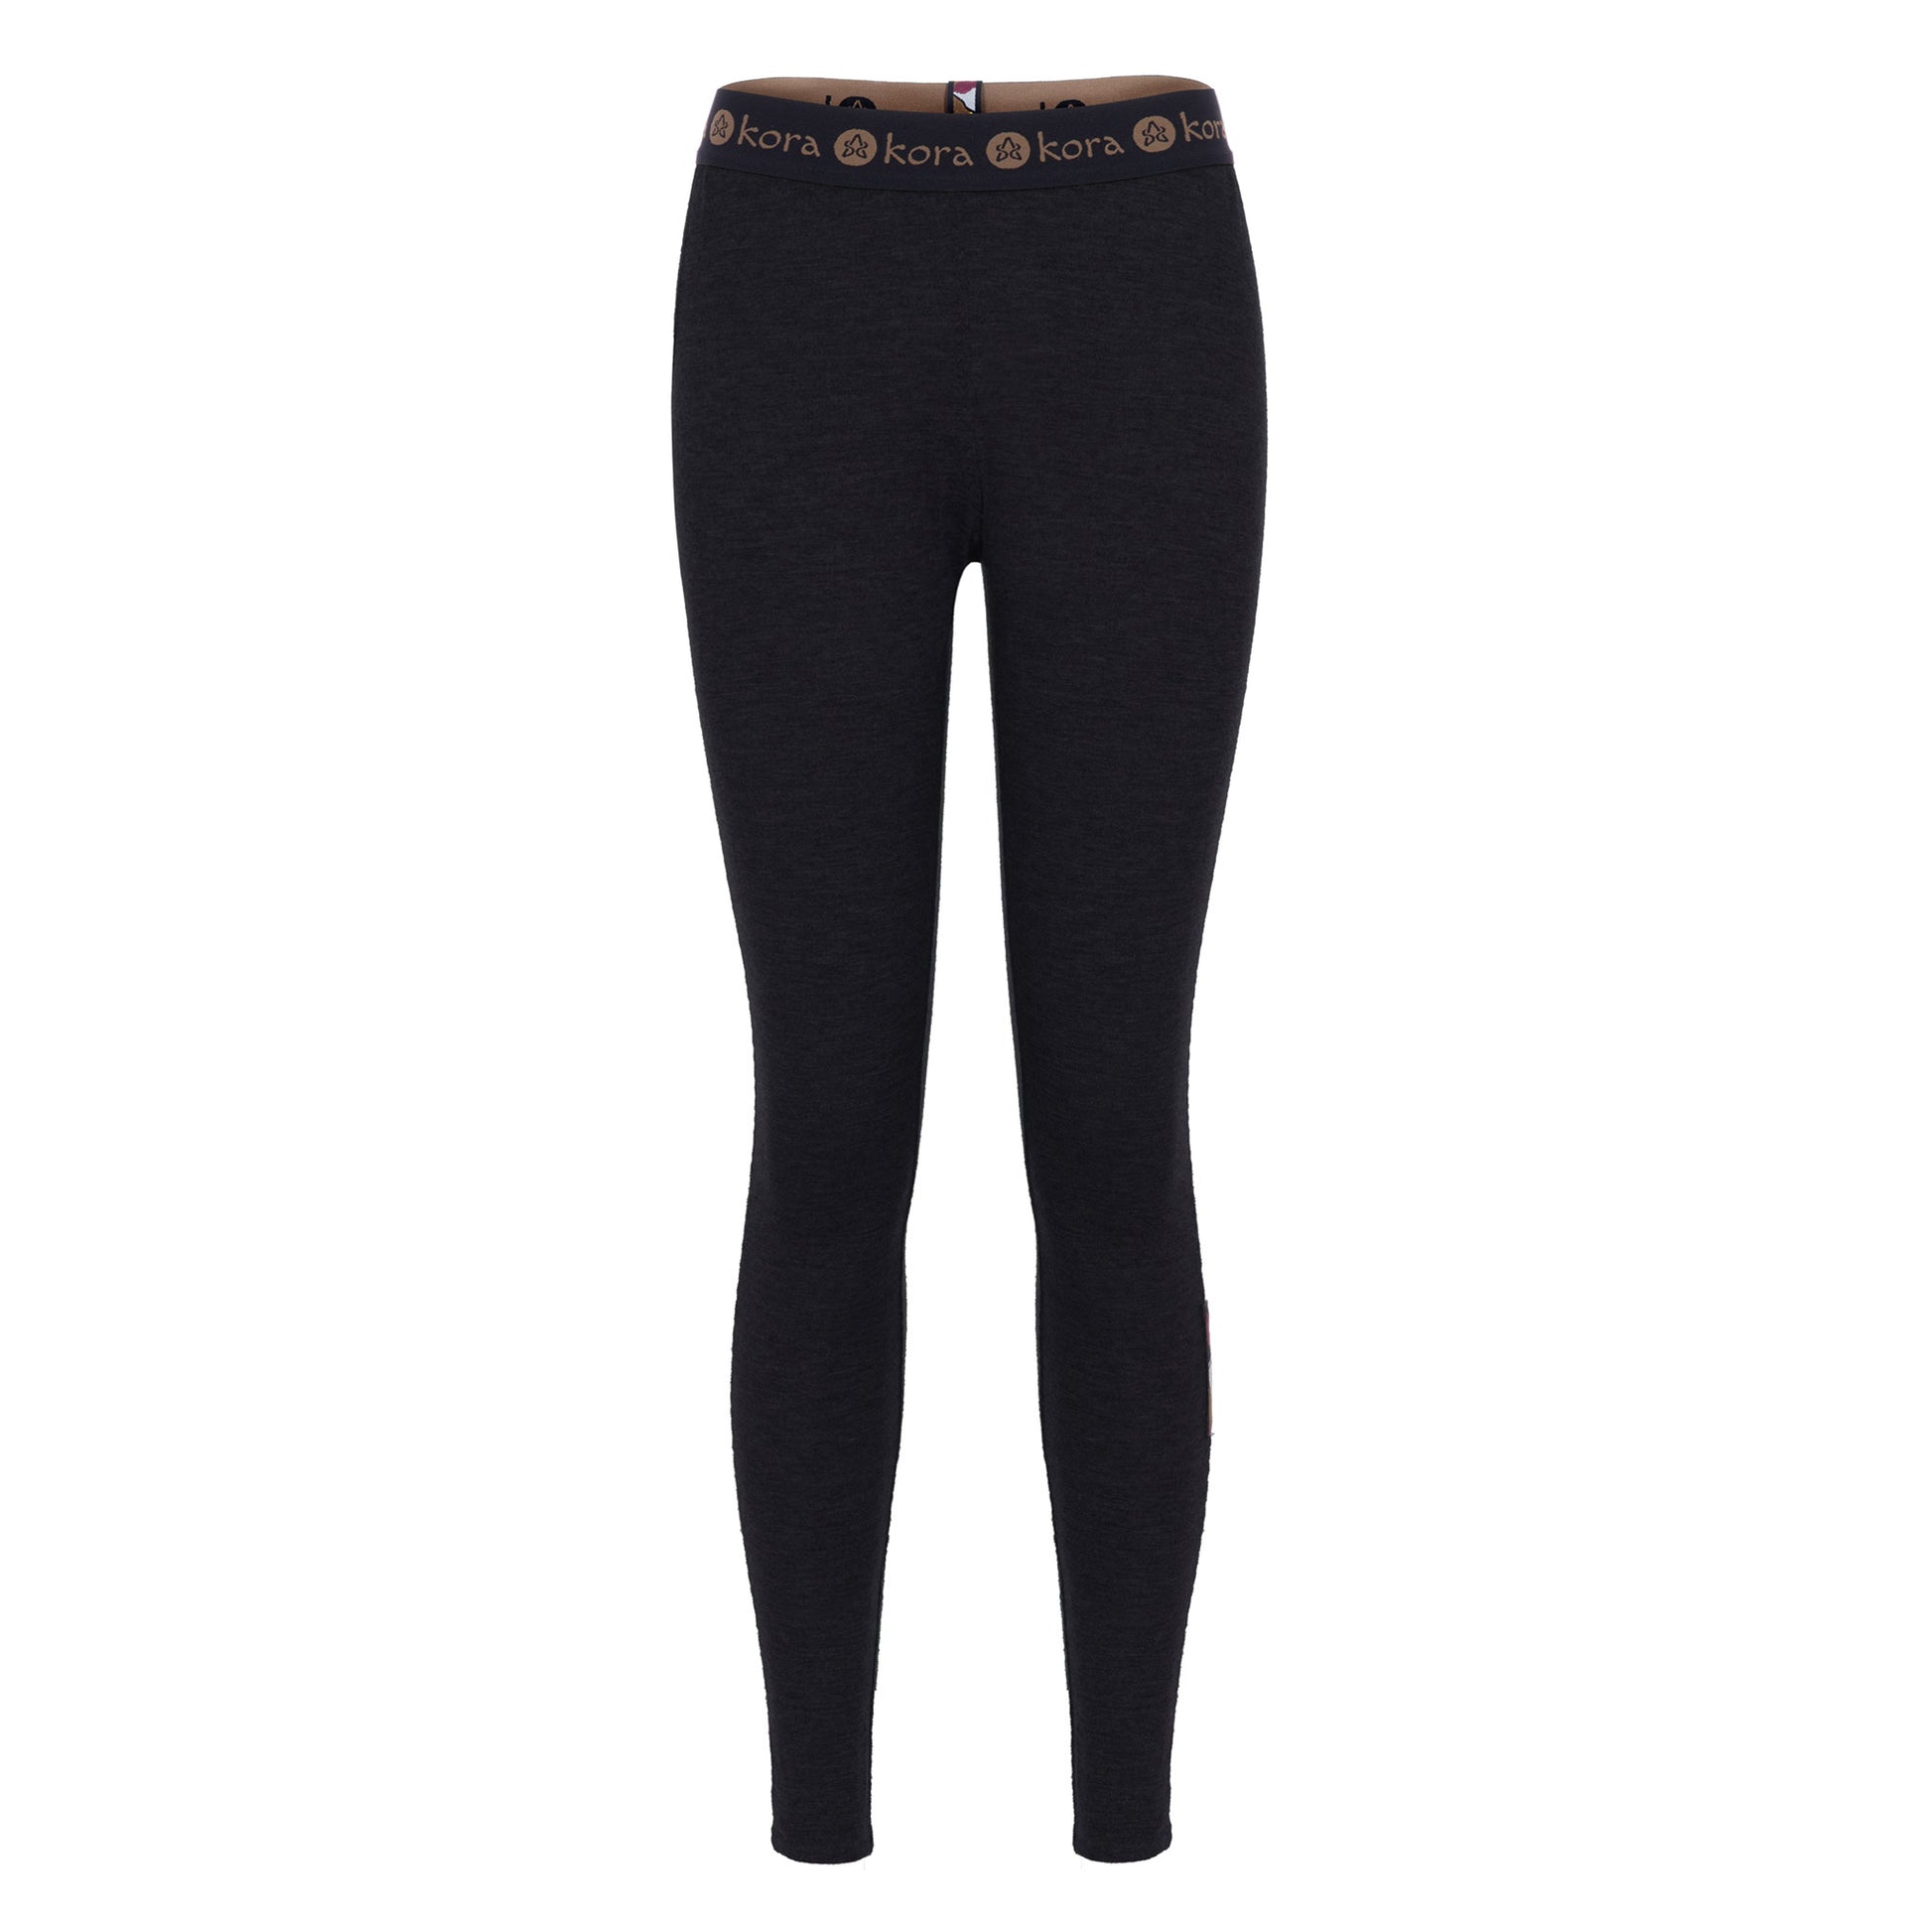 Women's Merino Wool Pants - Base Layer Black, Bottom